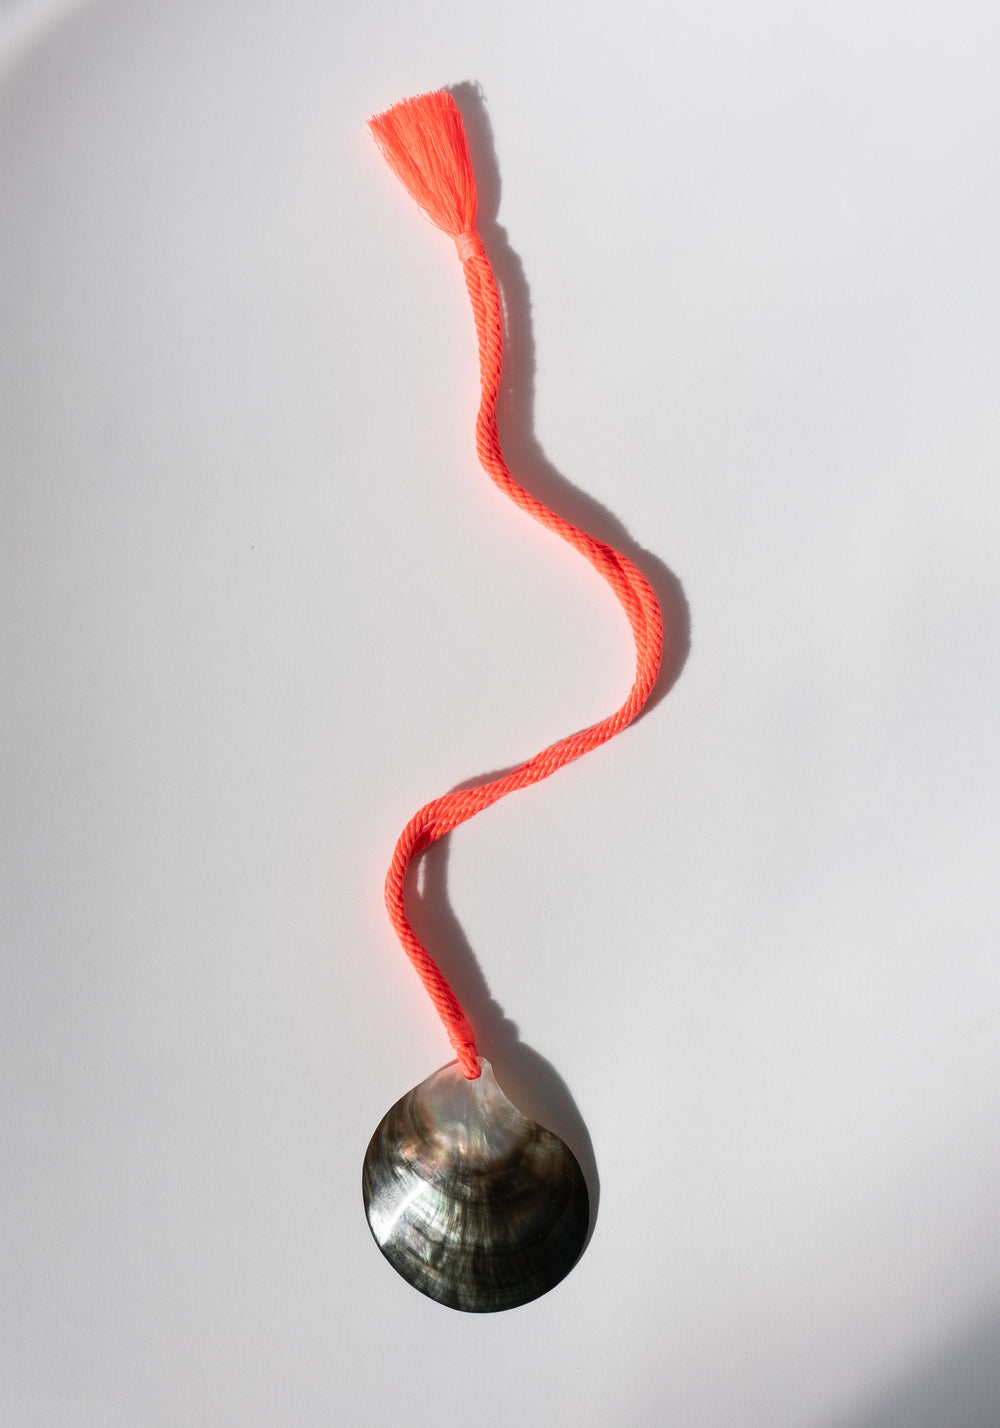 Matthew Swope Abalone Shell Necklace on Handmade Neon Cord